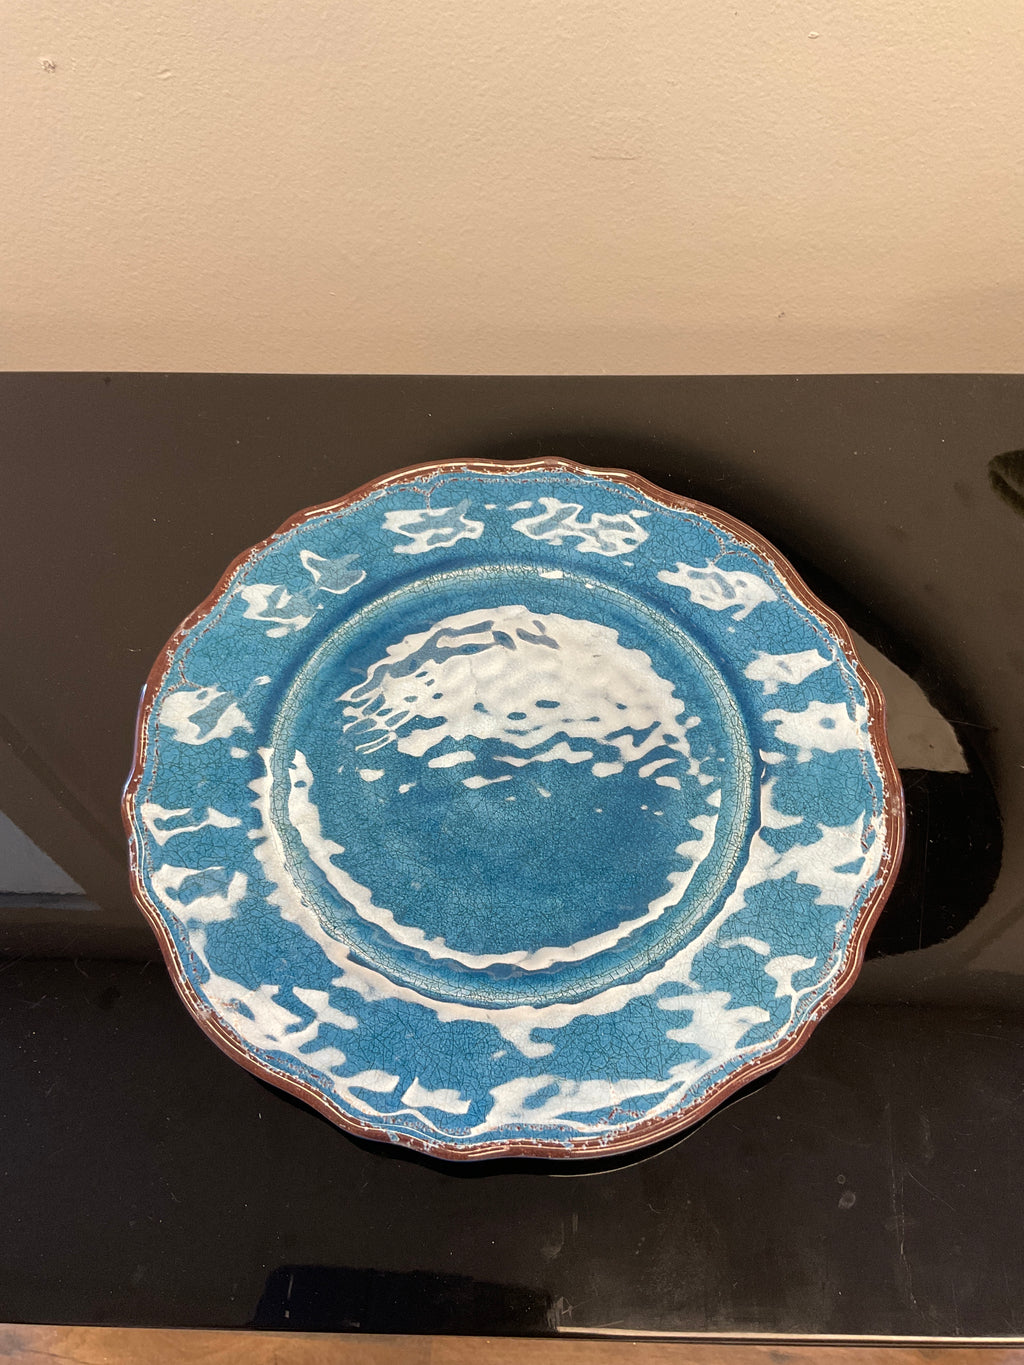 11” Dinner Plate - Anitqua Blue